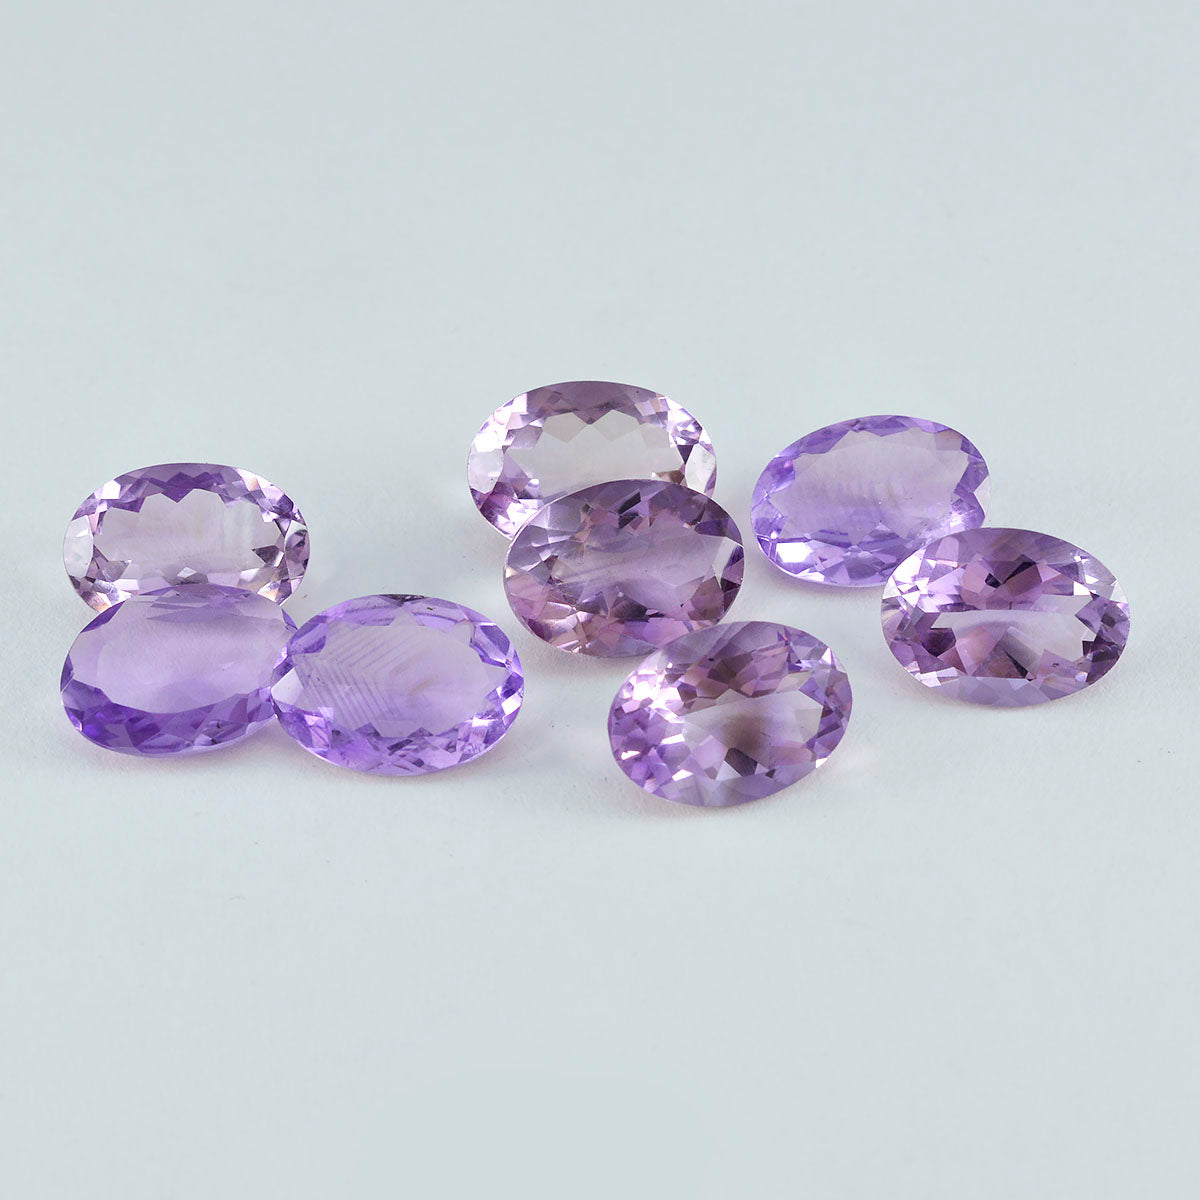 Riyogems 1PC Natural Purple Amethyst Faceted 6x8 mm Oval Shape A+1 Quality Gem